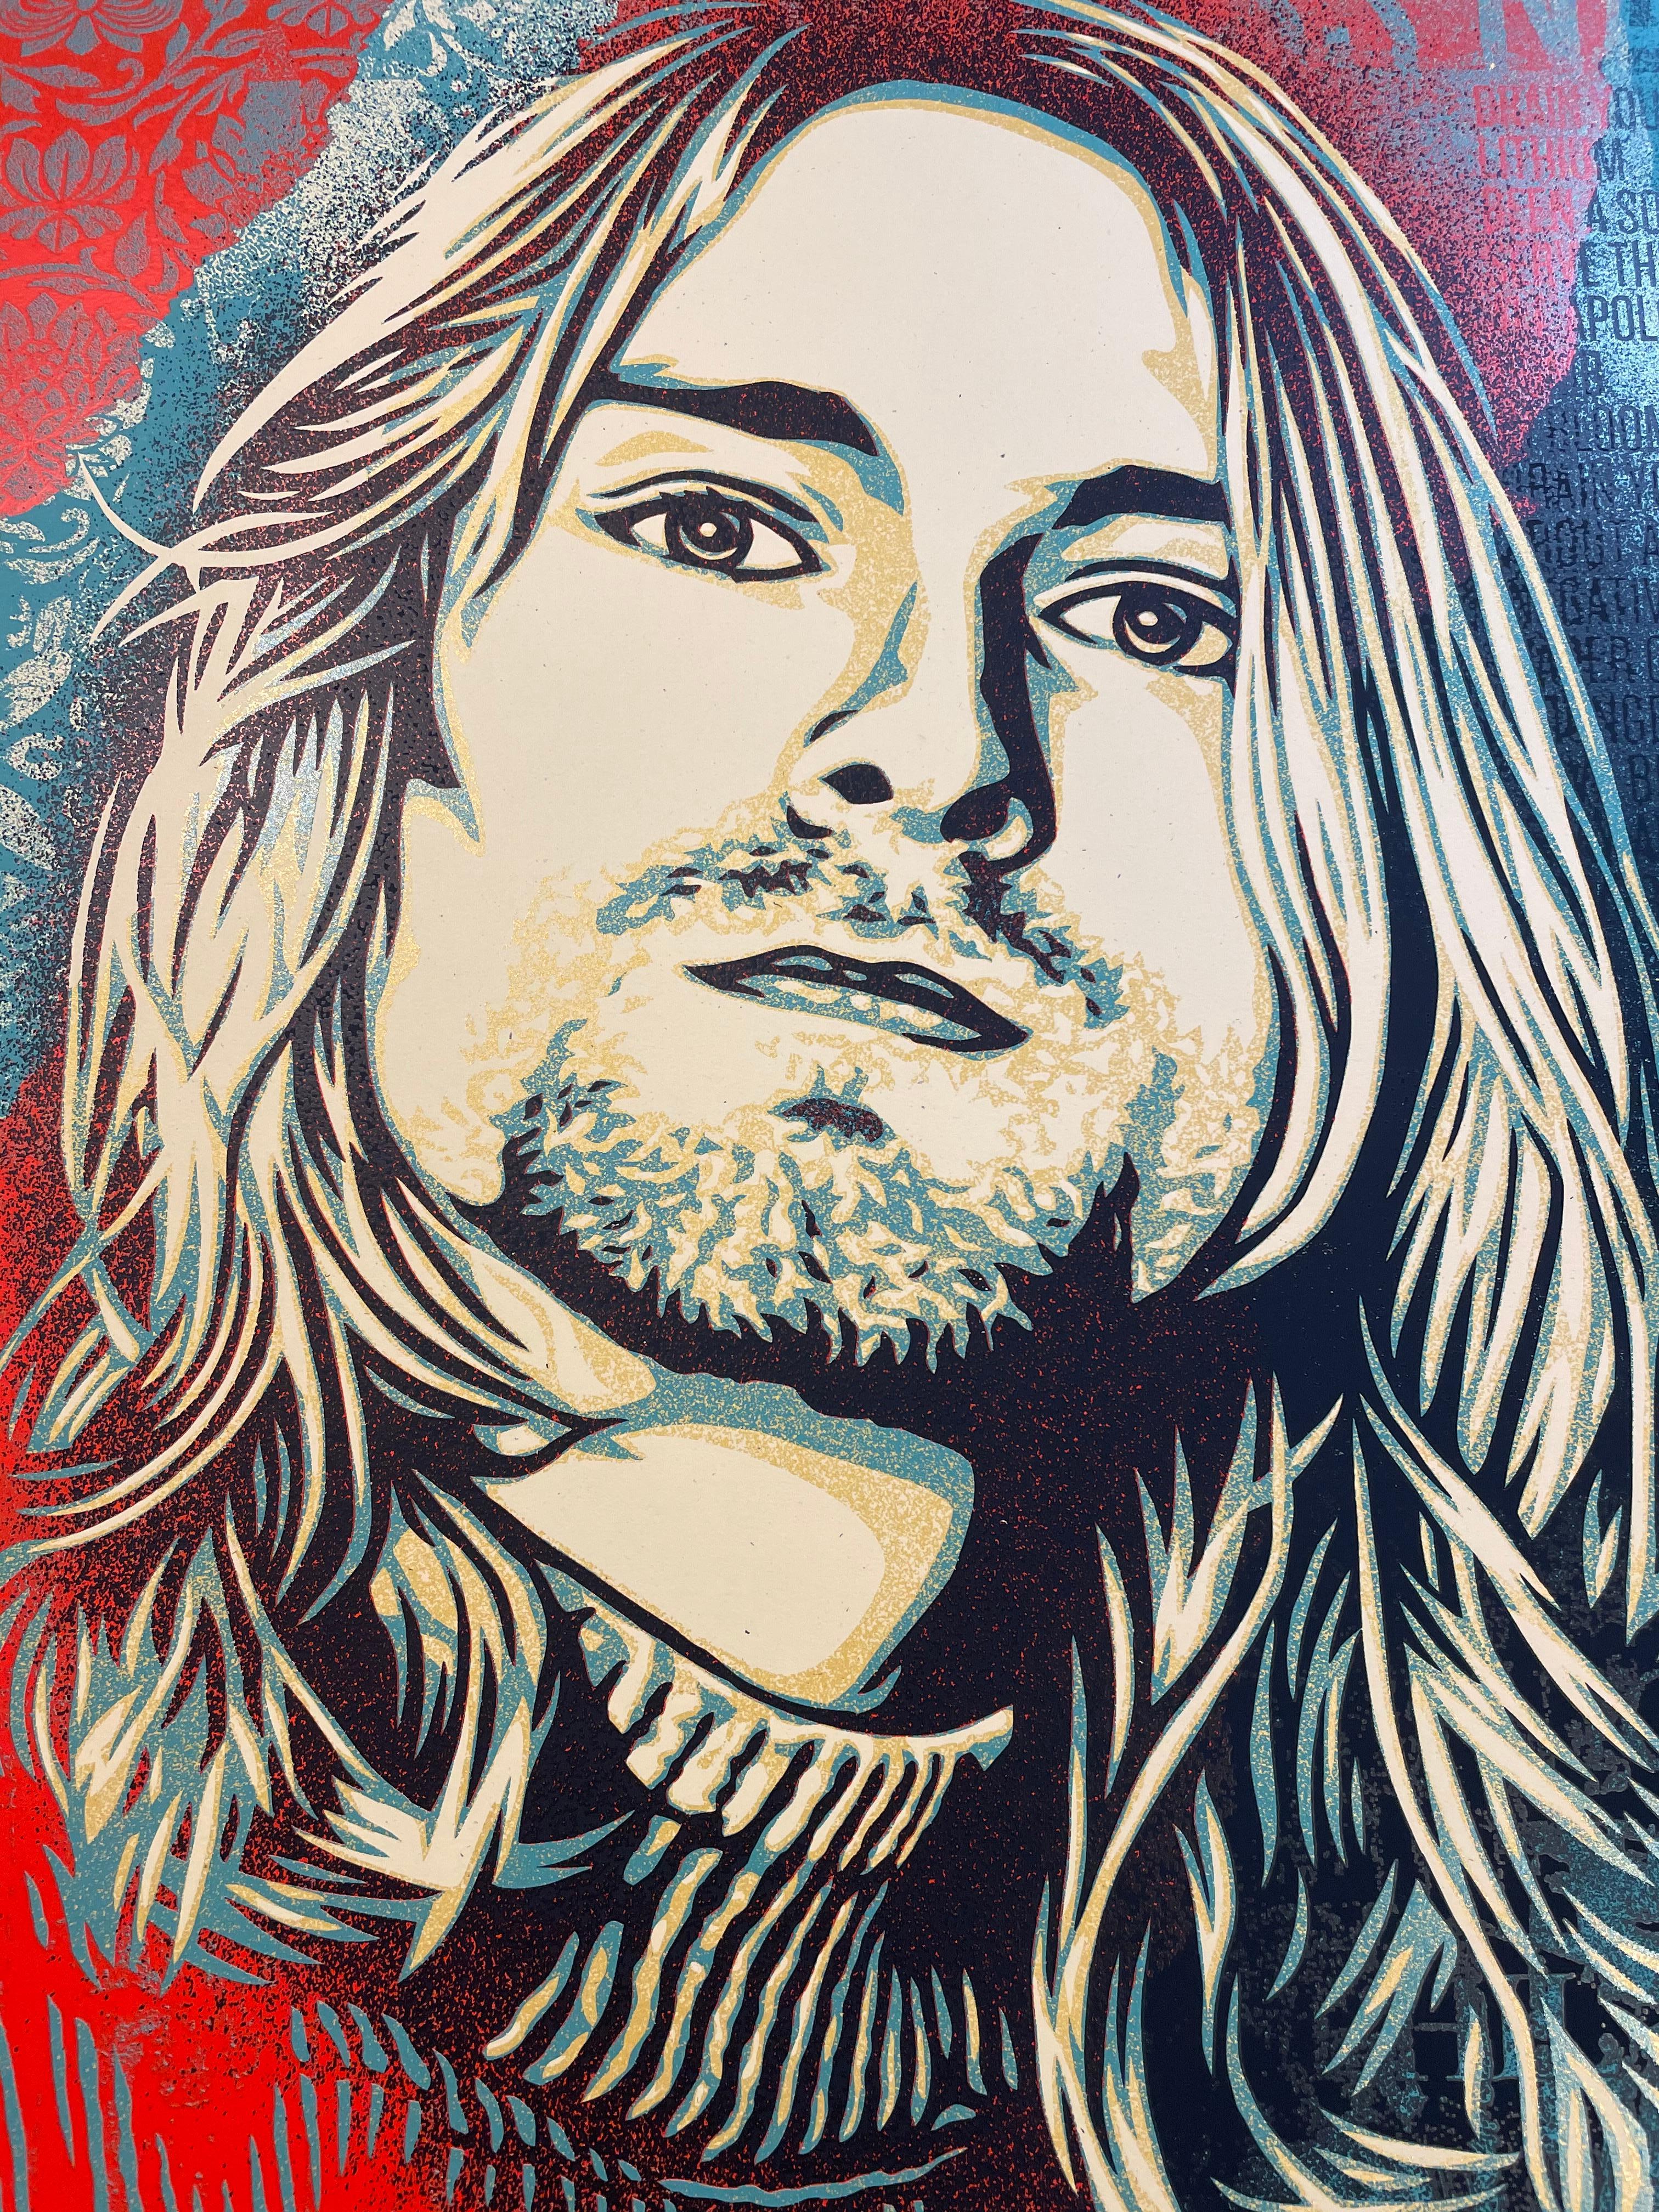 Nirvana Kurt Cobain Endless Nameless Obey Giant Signed Print Shepard Fairey Rock 1